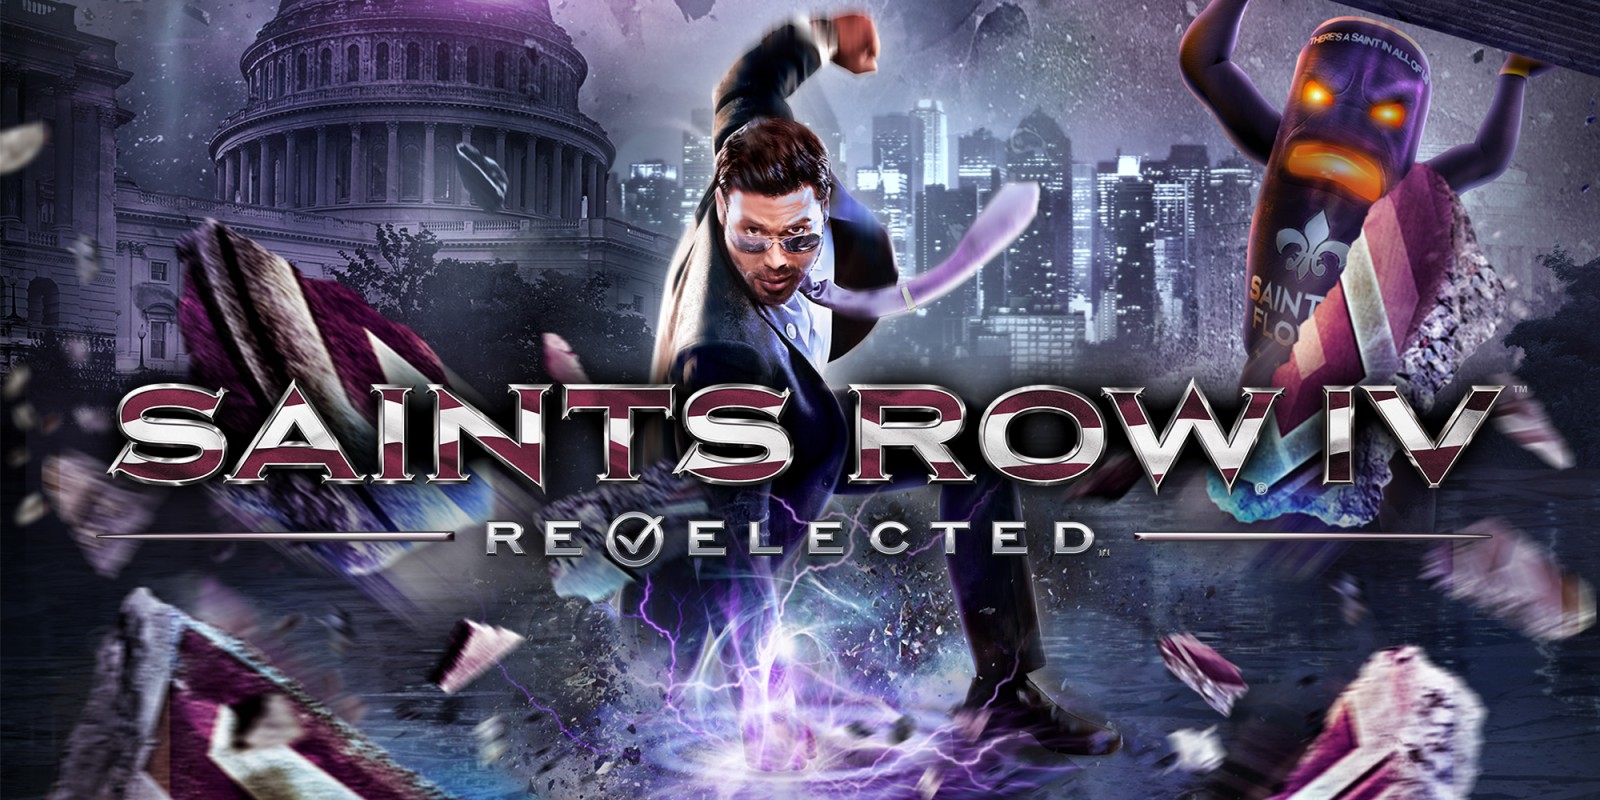 Saints Row IV Re-Elected Review – The Resurrection of a Saint?